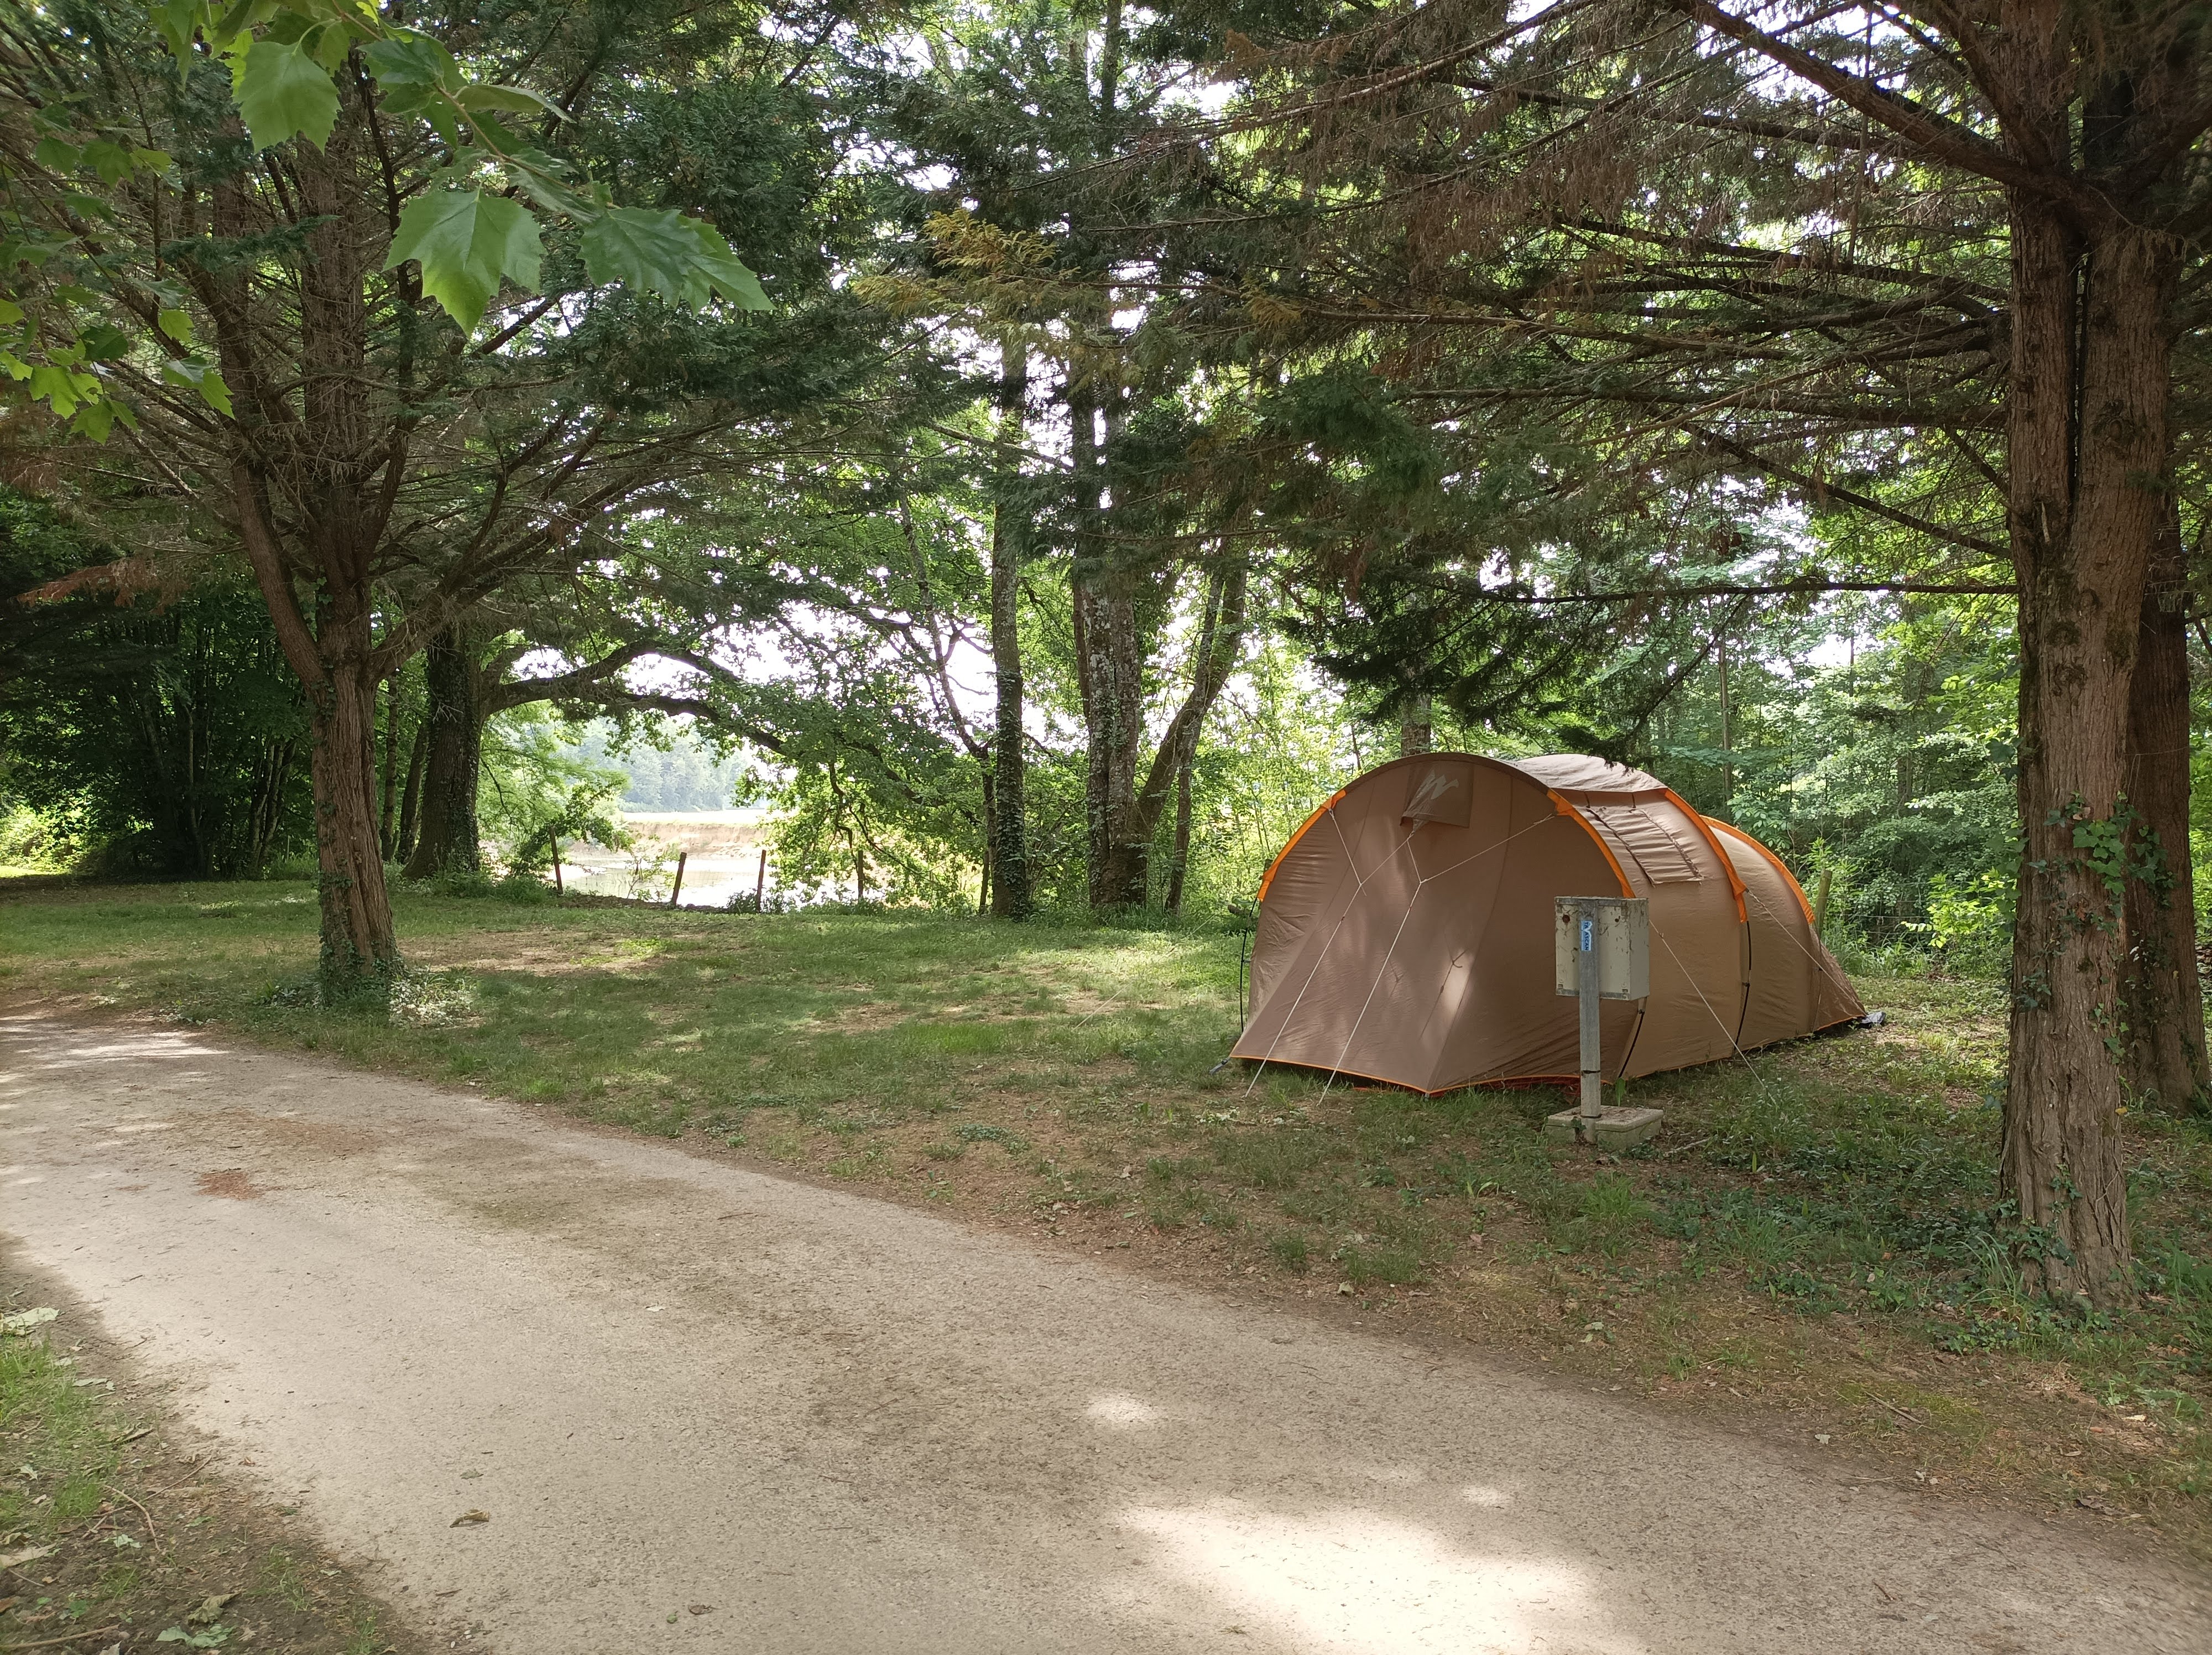 Pitch tent , caravan or motor home